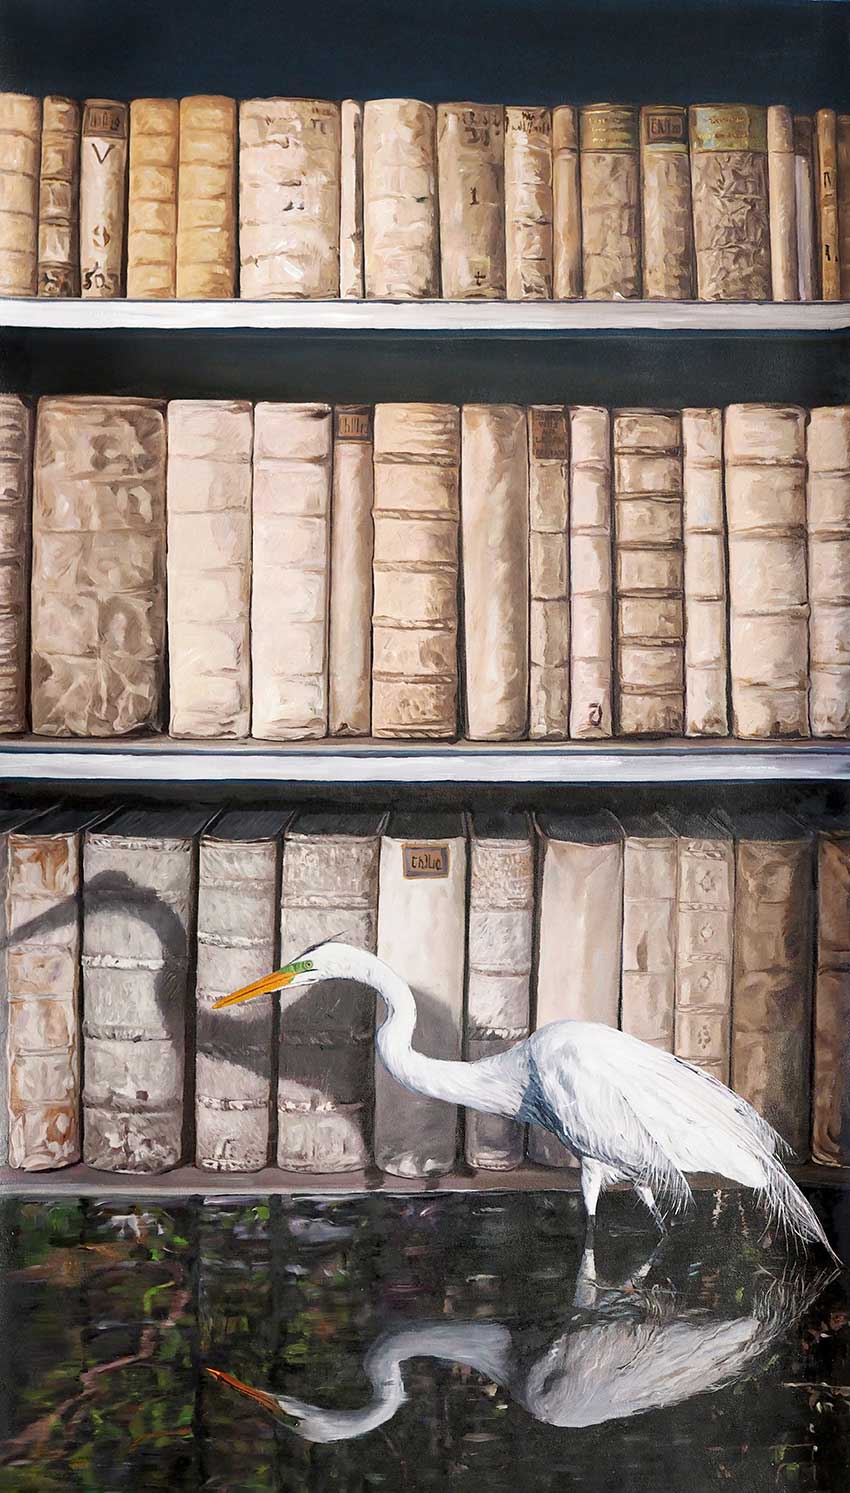 Heron in Library 3 by James McGrath at Olsen Gallery